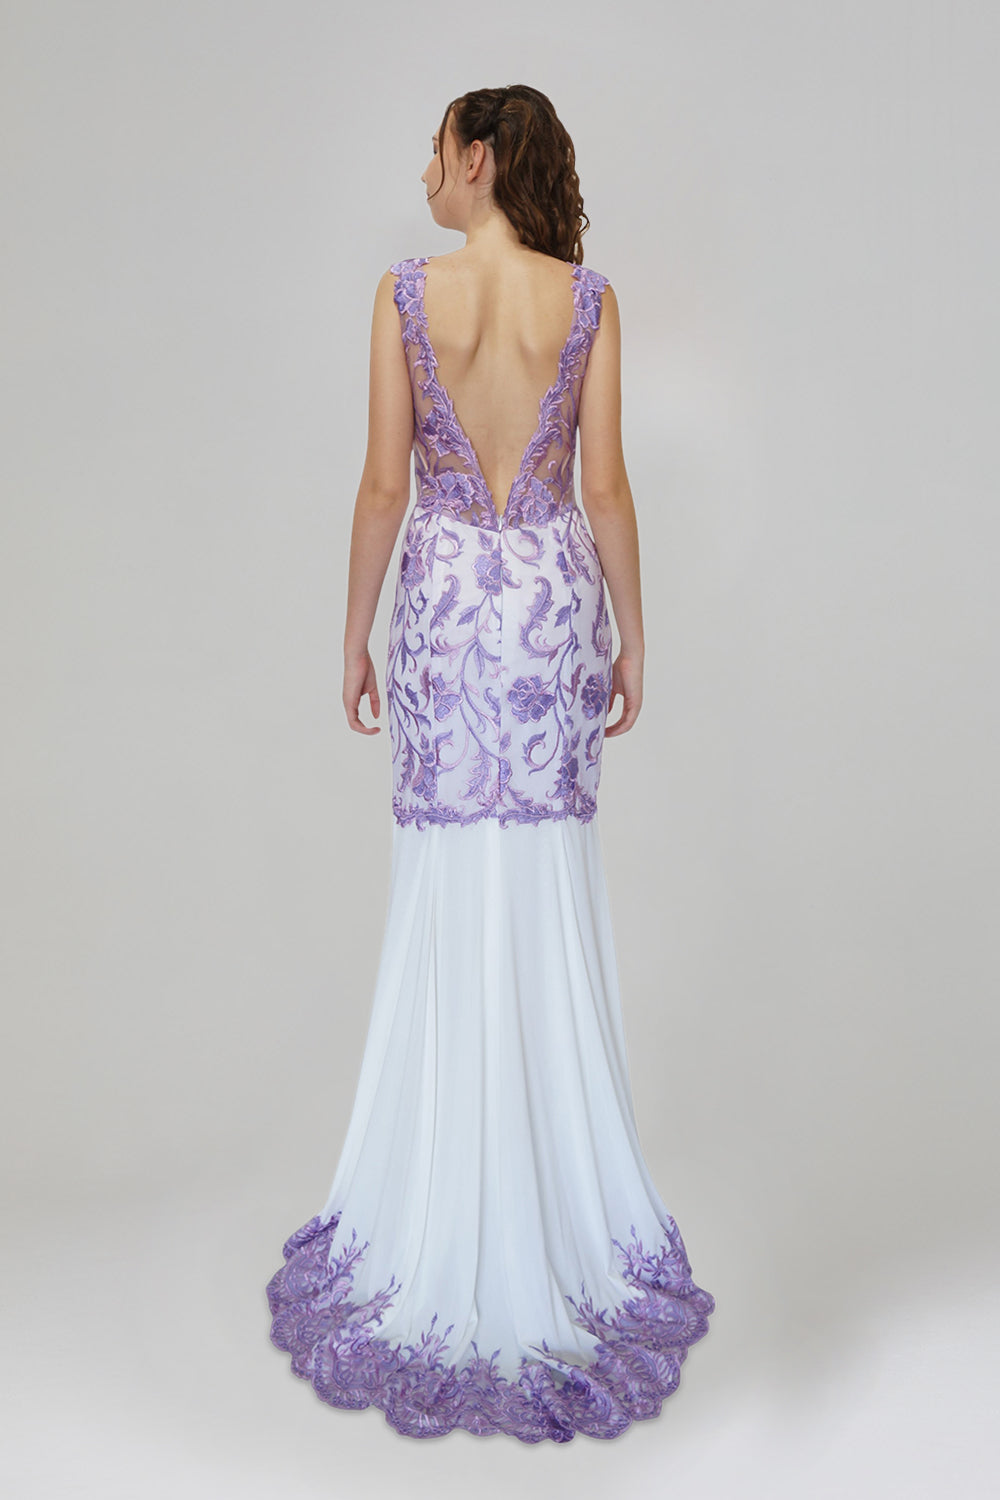 made to order purple white bridesmaid dresses perth australia online envious bridal & formal